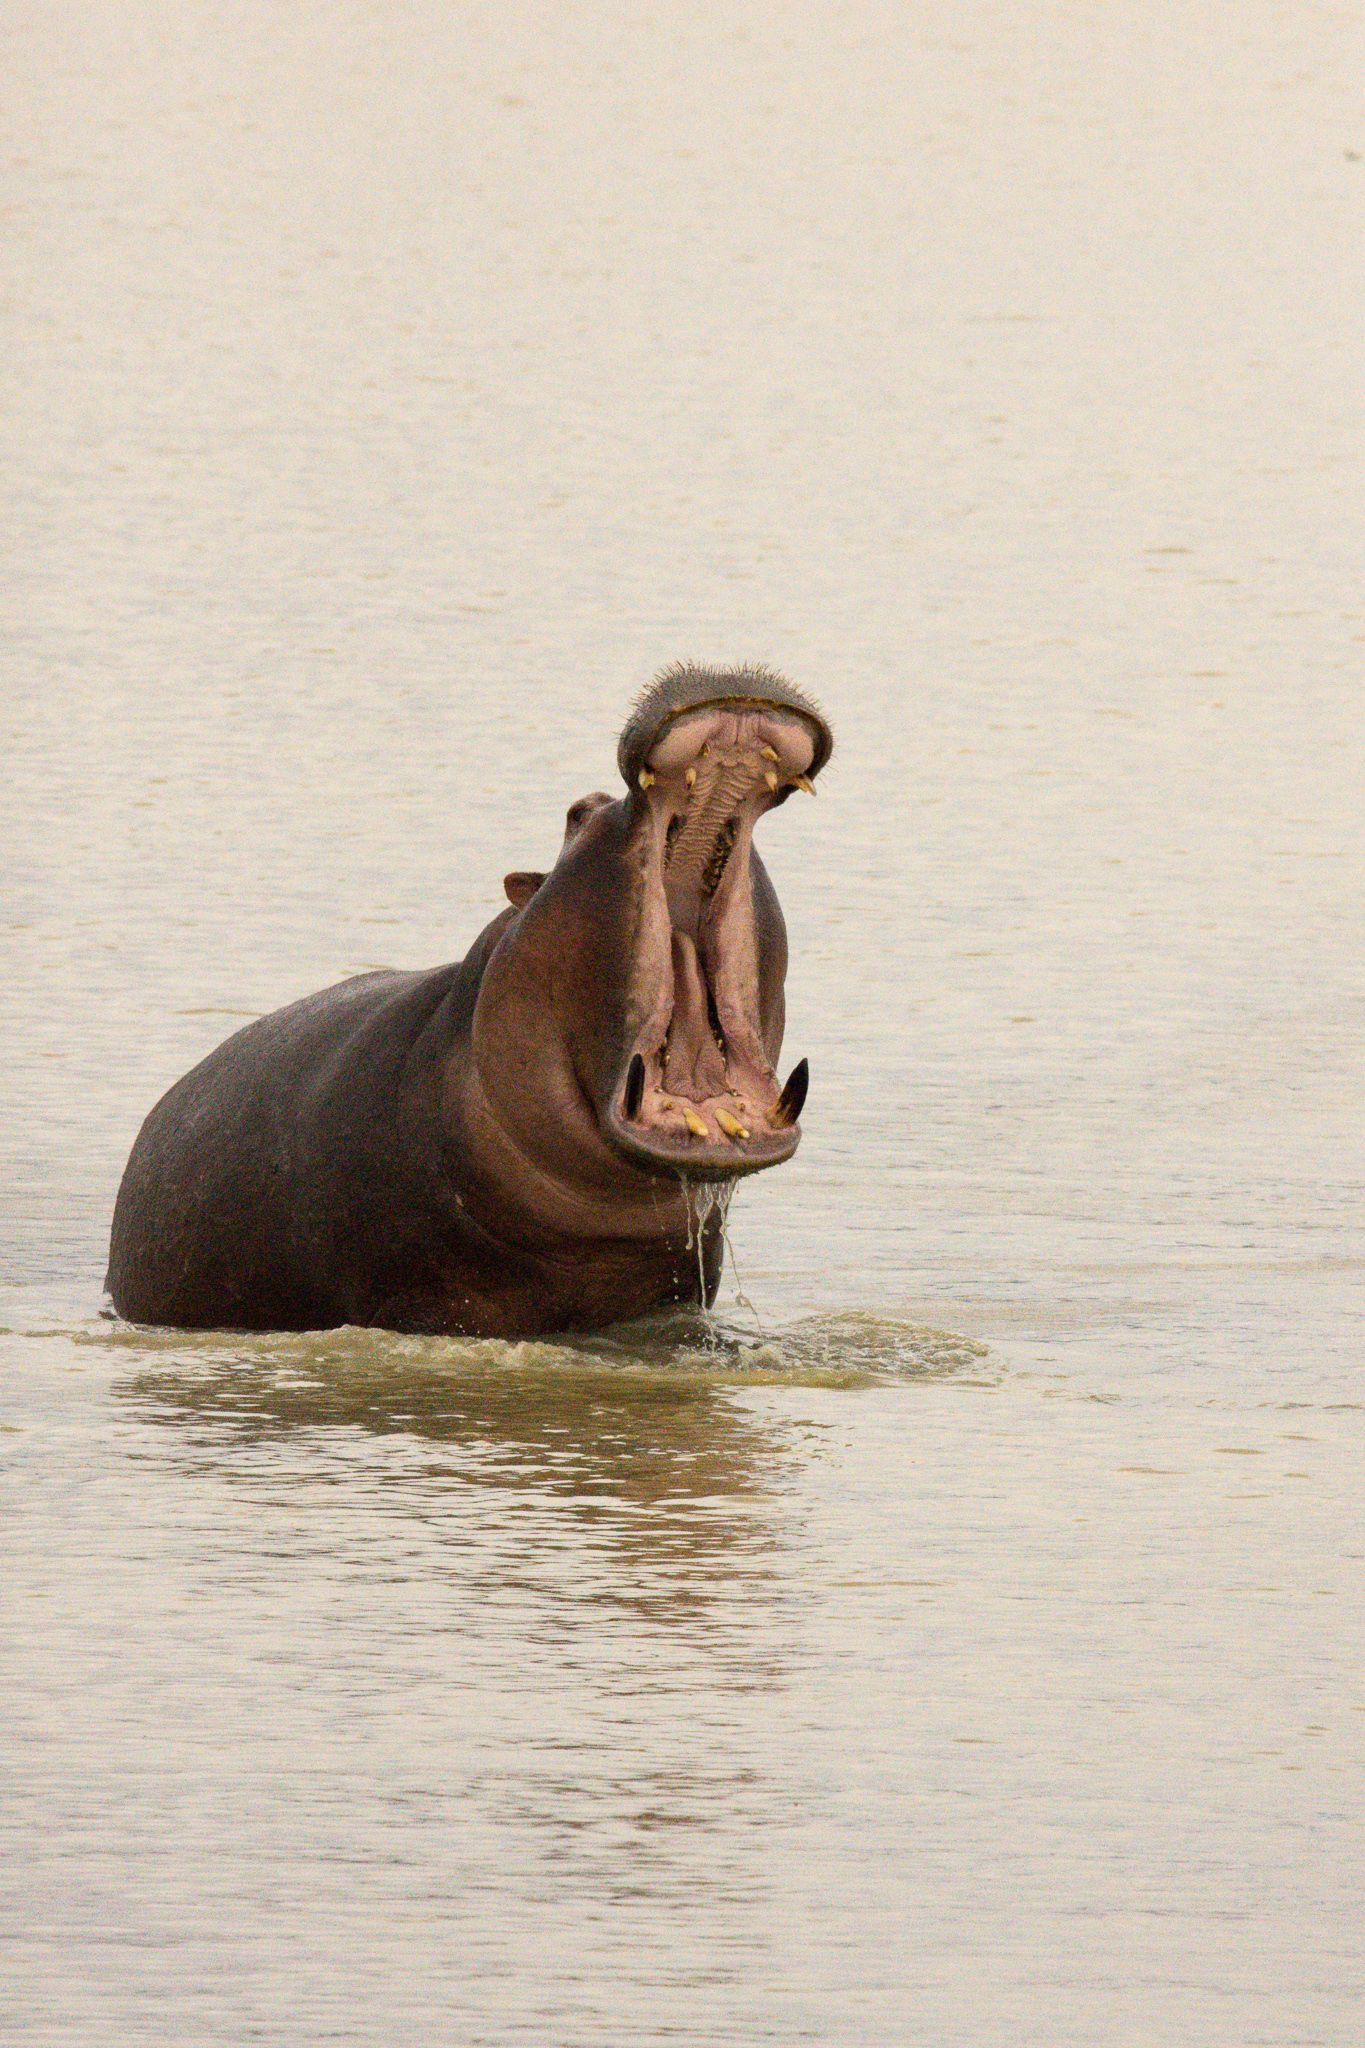 A roaring hippo seen on a Tanzania safari